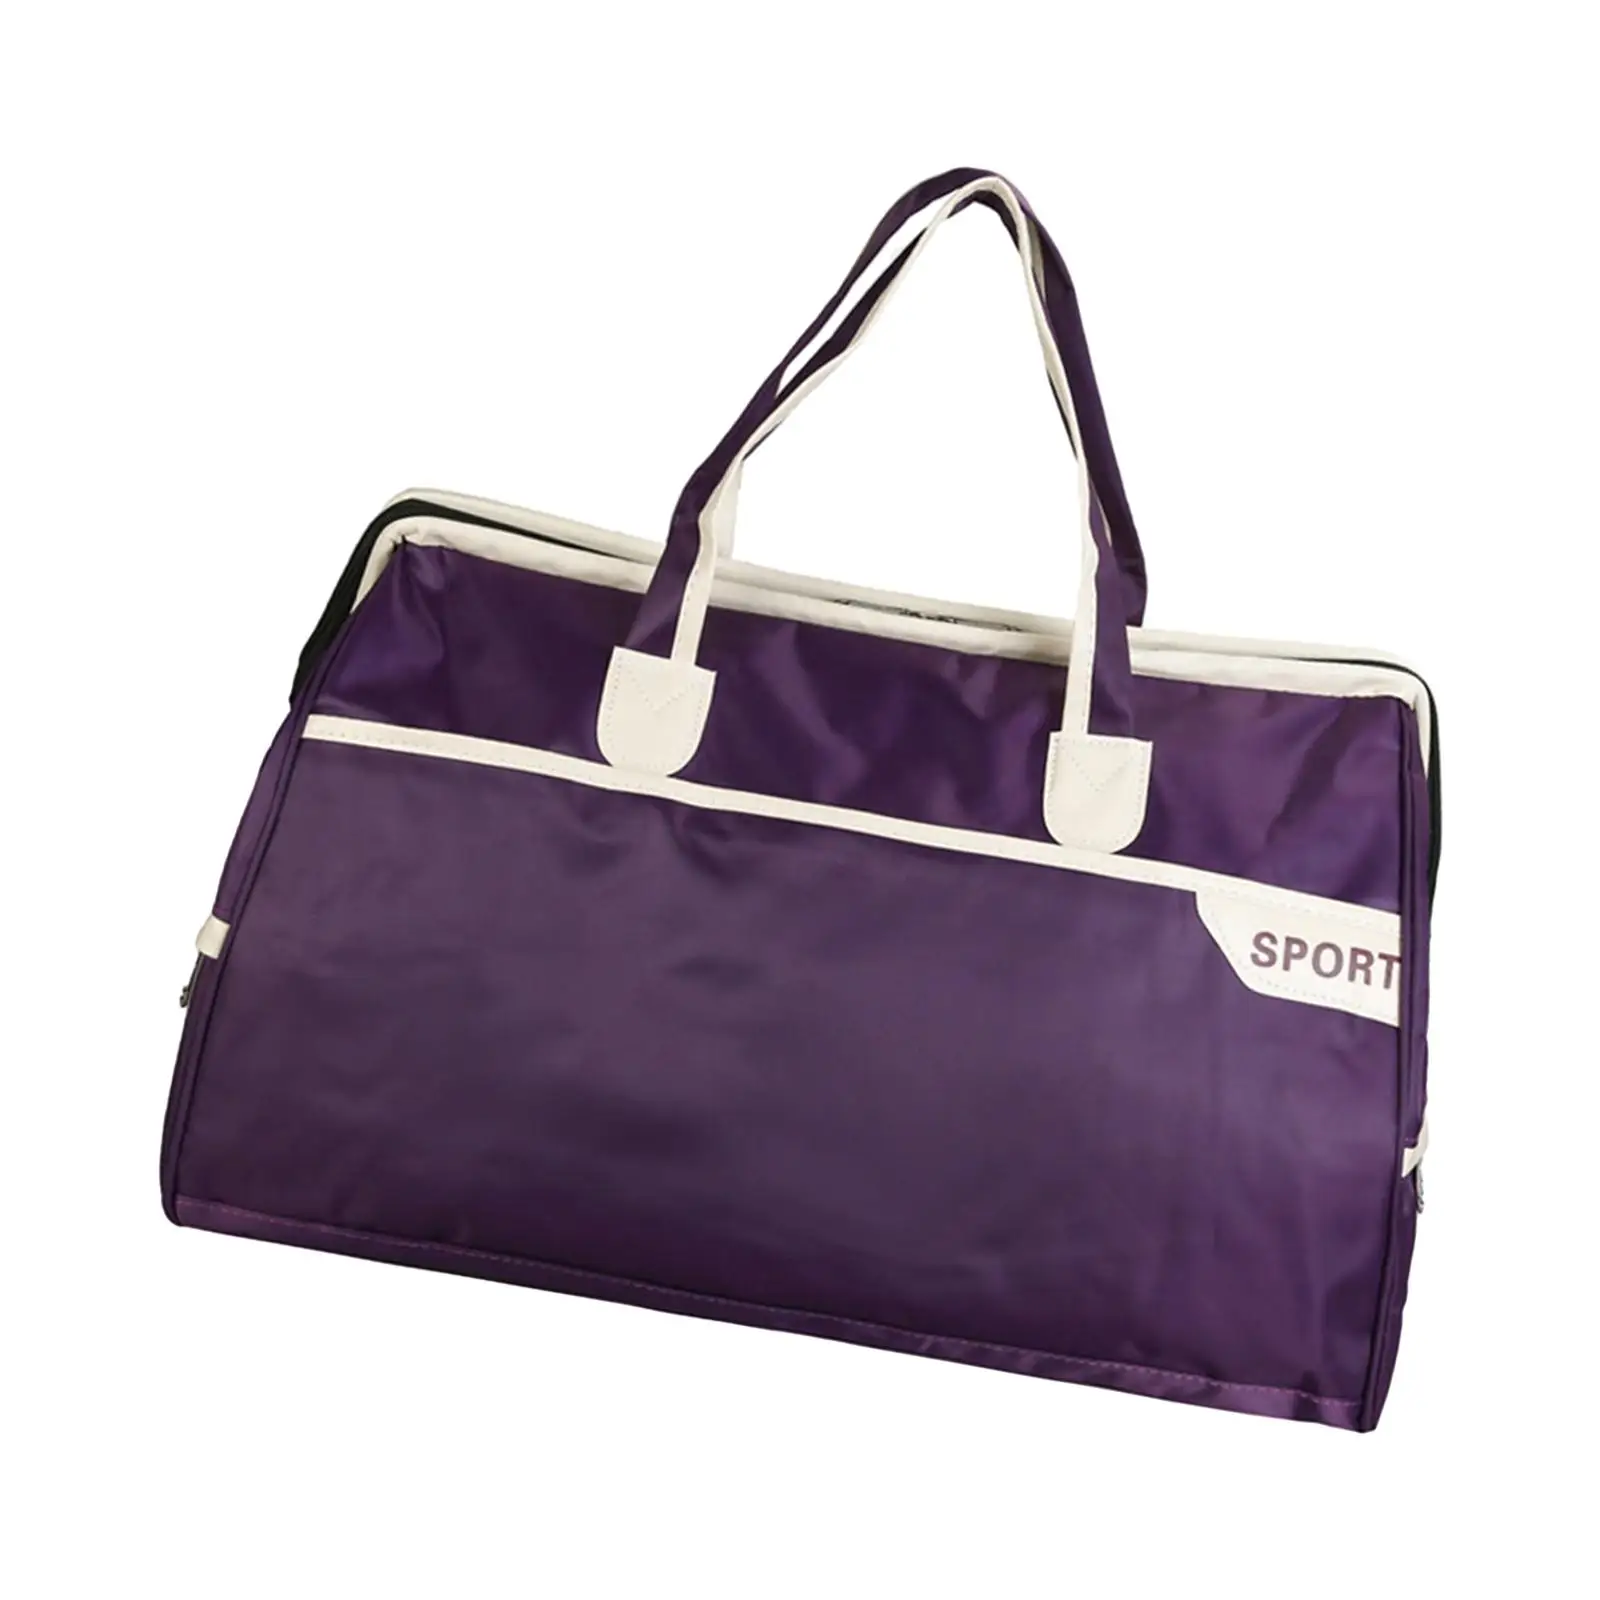 Sports Gym Bag Multipurpose Carry on Organizer Shoulder Bag Folding Travel Duffel Tote Bag for Picnic Exercise Trip Yoga Outddor